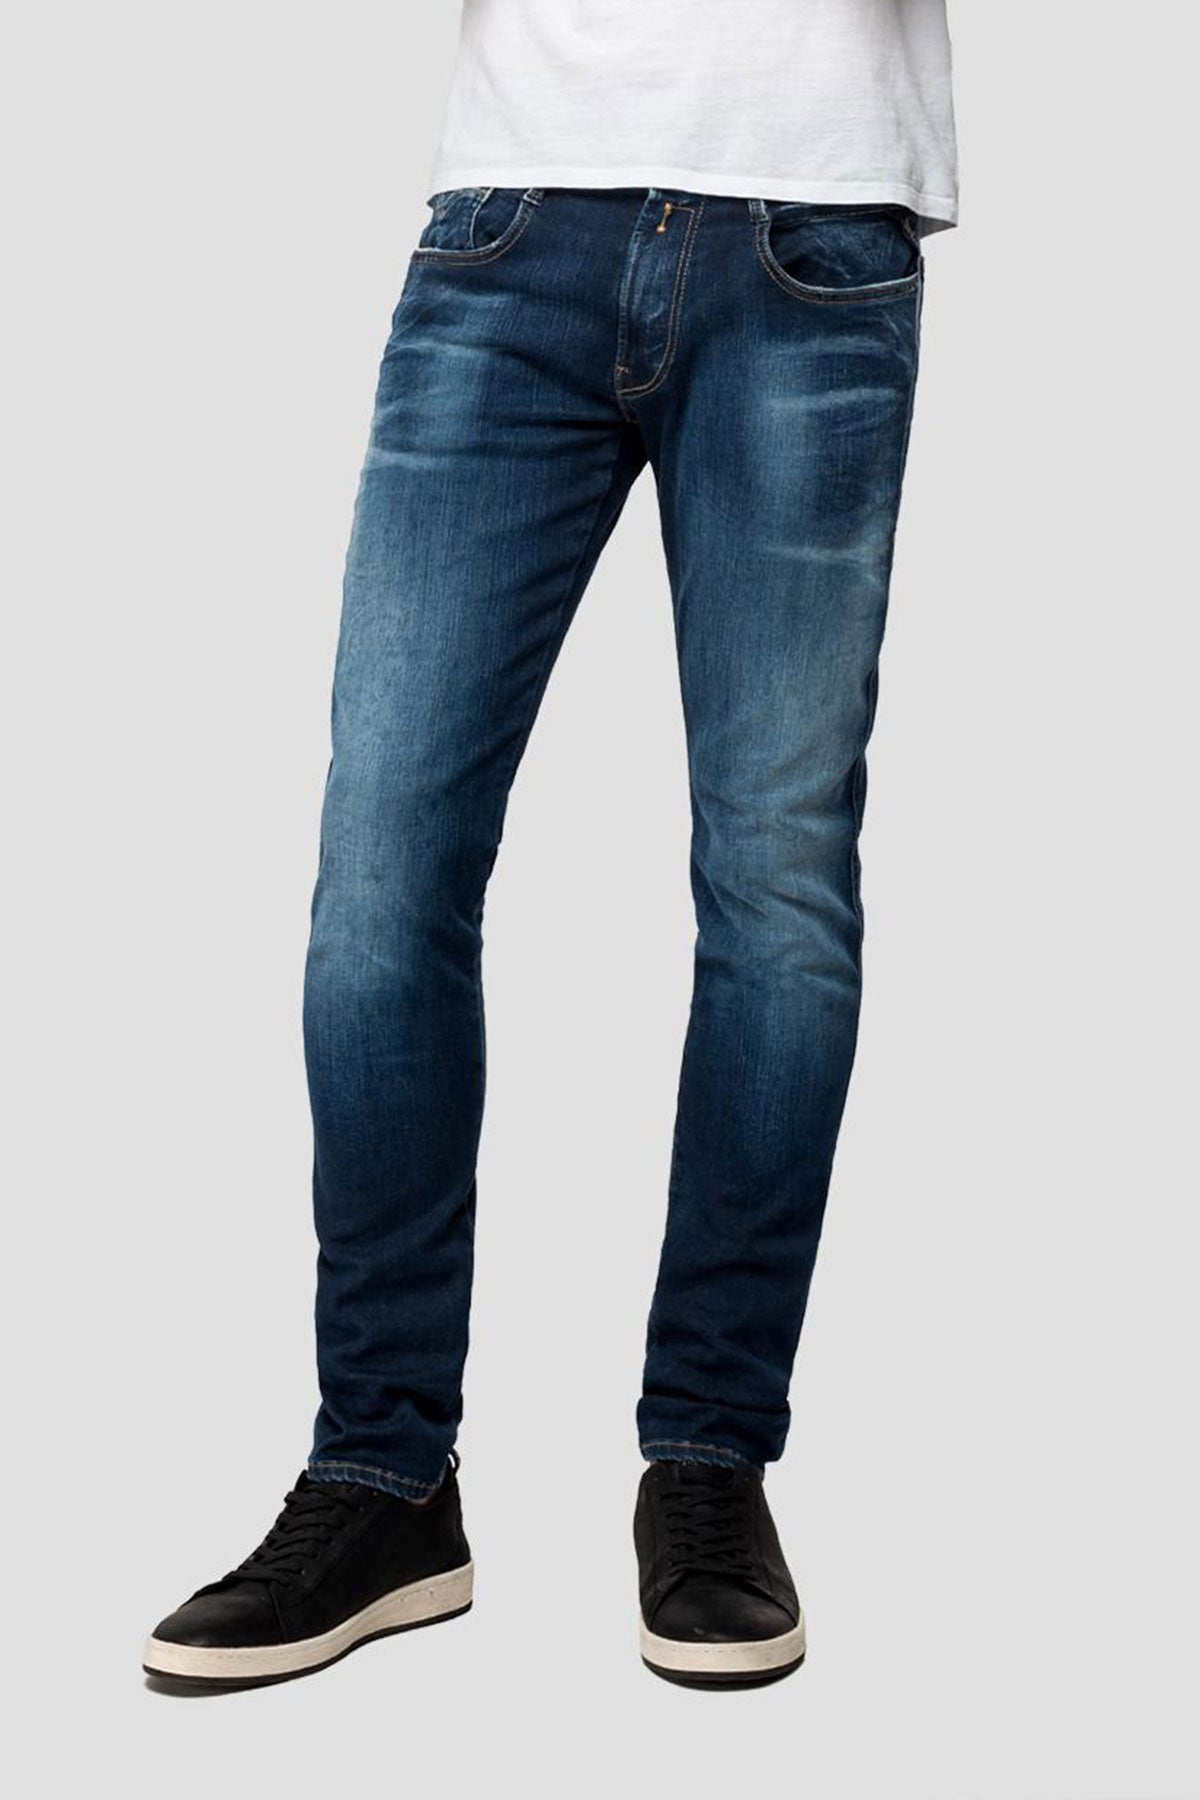 Replay Slim Fit Hyperflex Bio Anbass Jeans-Libas Trendy Fashion Store